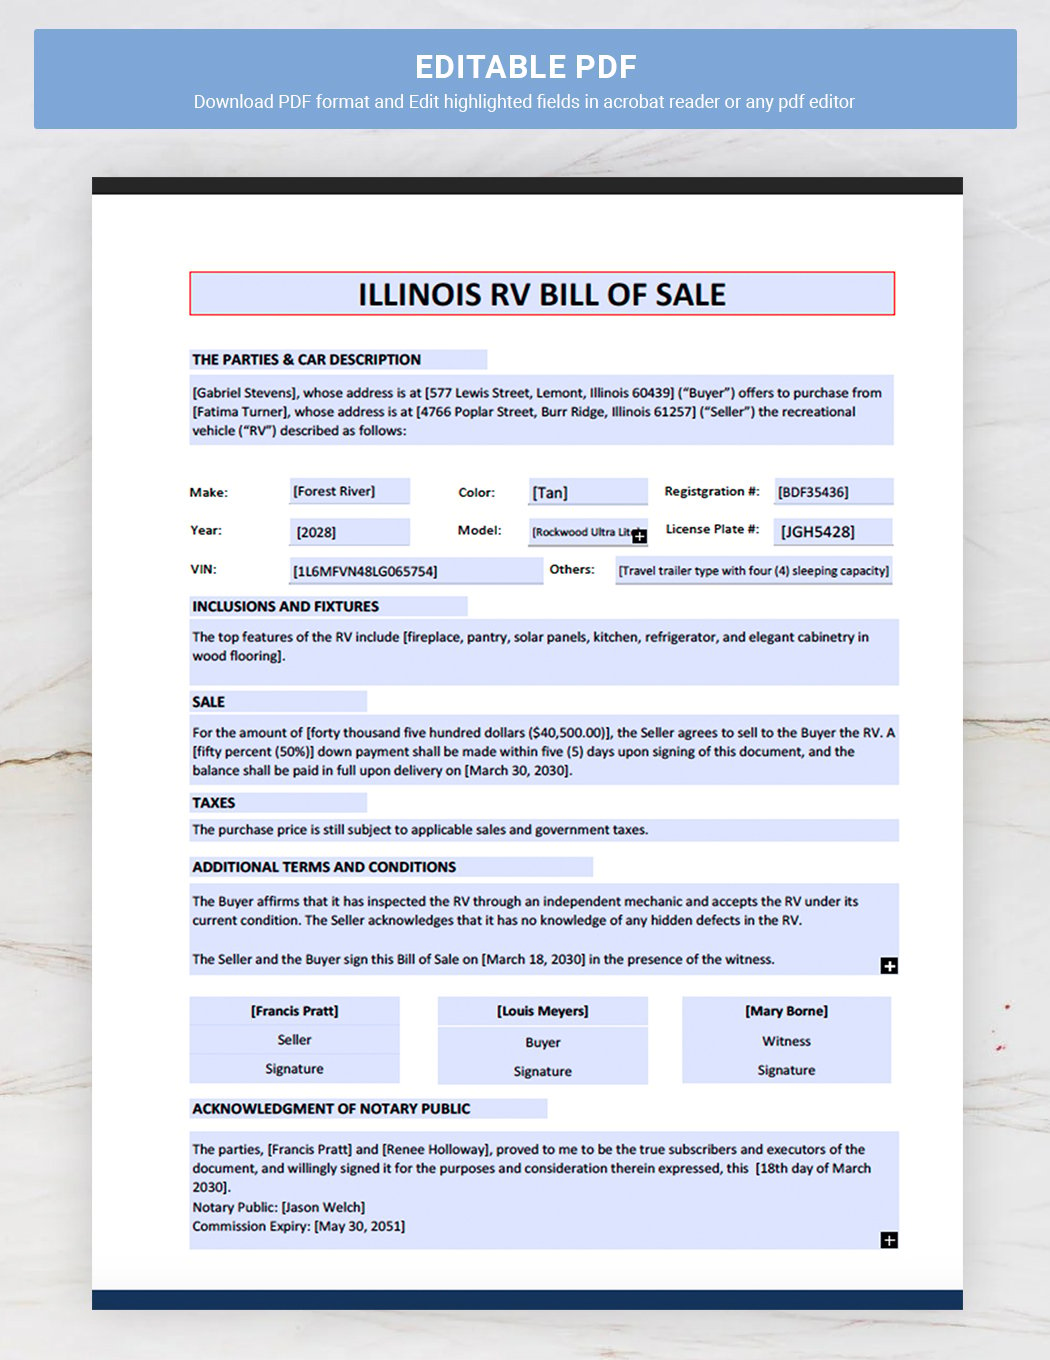 Illinois RV Bill of Sale Form Template